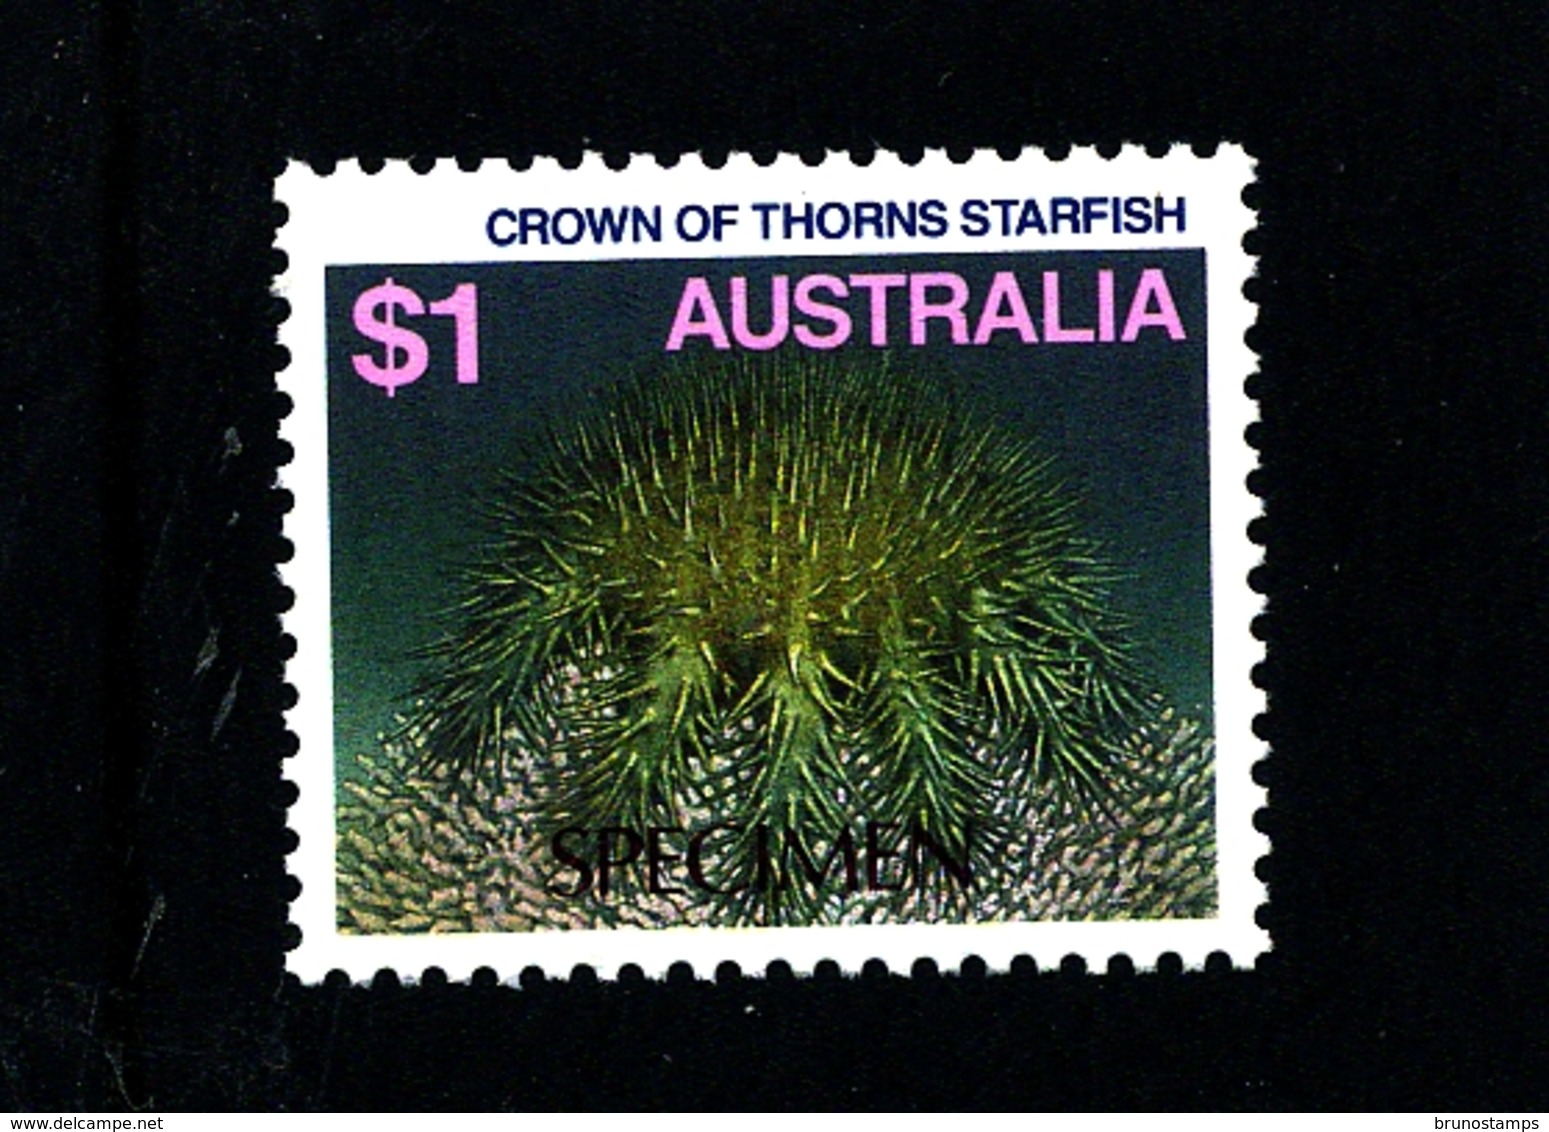 AUSTRALIA - 1988  $ 1  CROWN OF THORNS  STARFISH  SPECIMEN  OVERPRINTED  MINT NH - Errors, Freaks & Oddities (EFO)